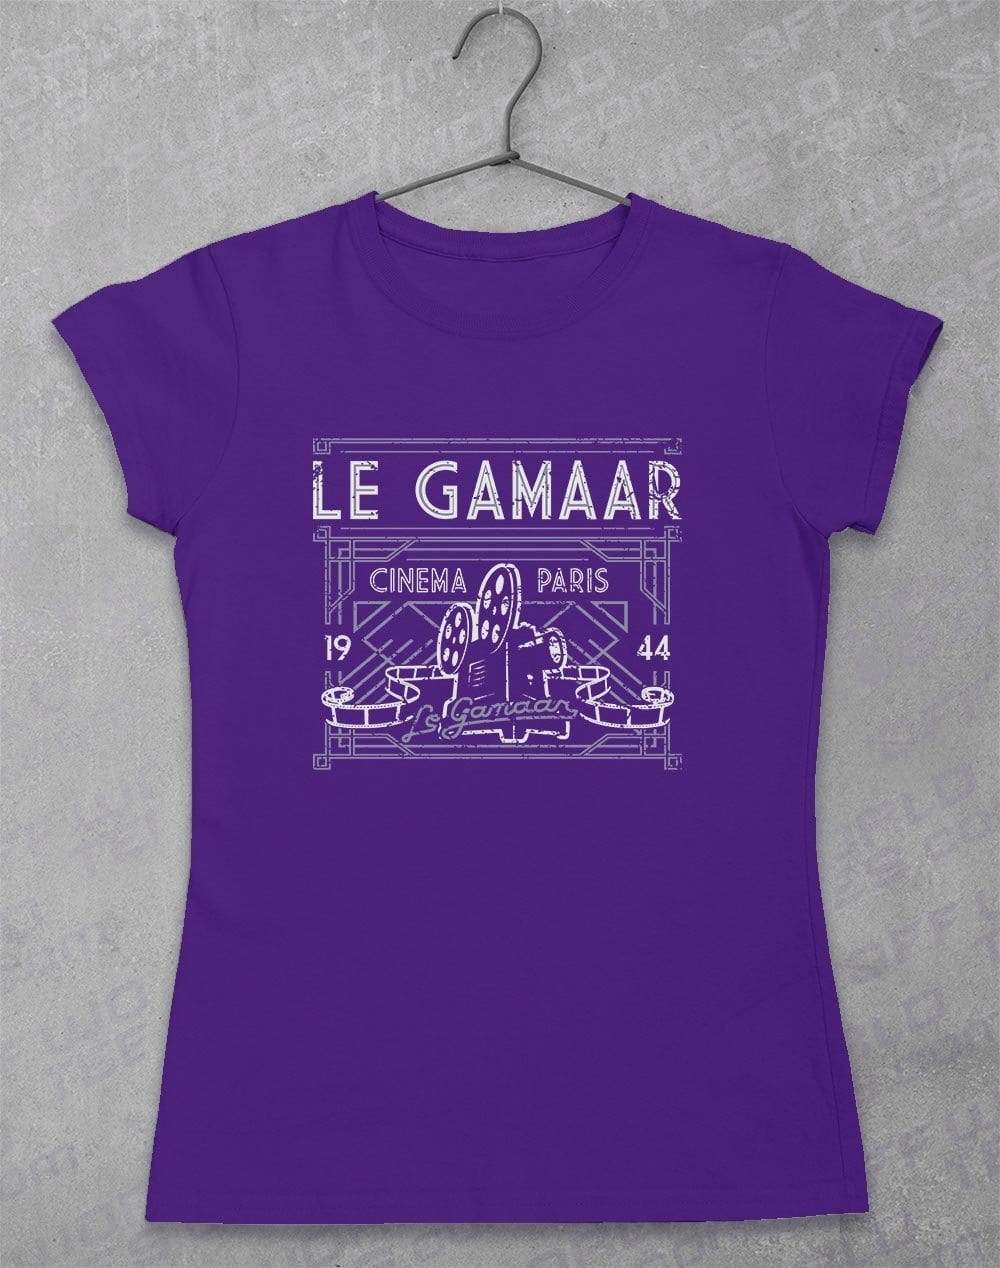 Le Gamaar - Women's T-Shirt 8-10 / Lilac  - Off World Tees